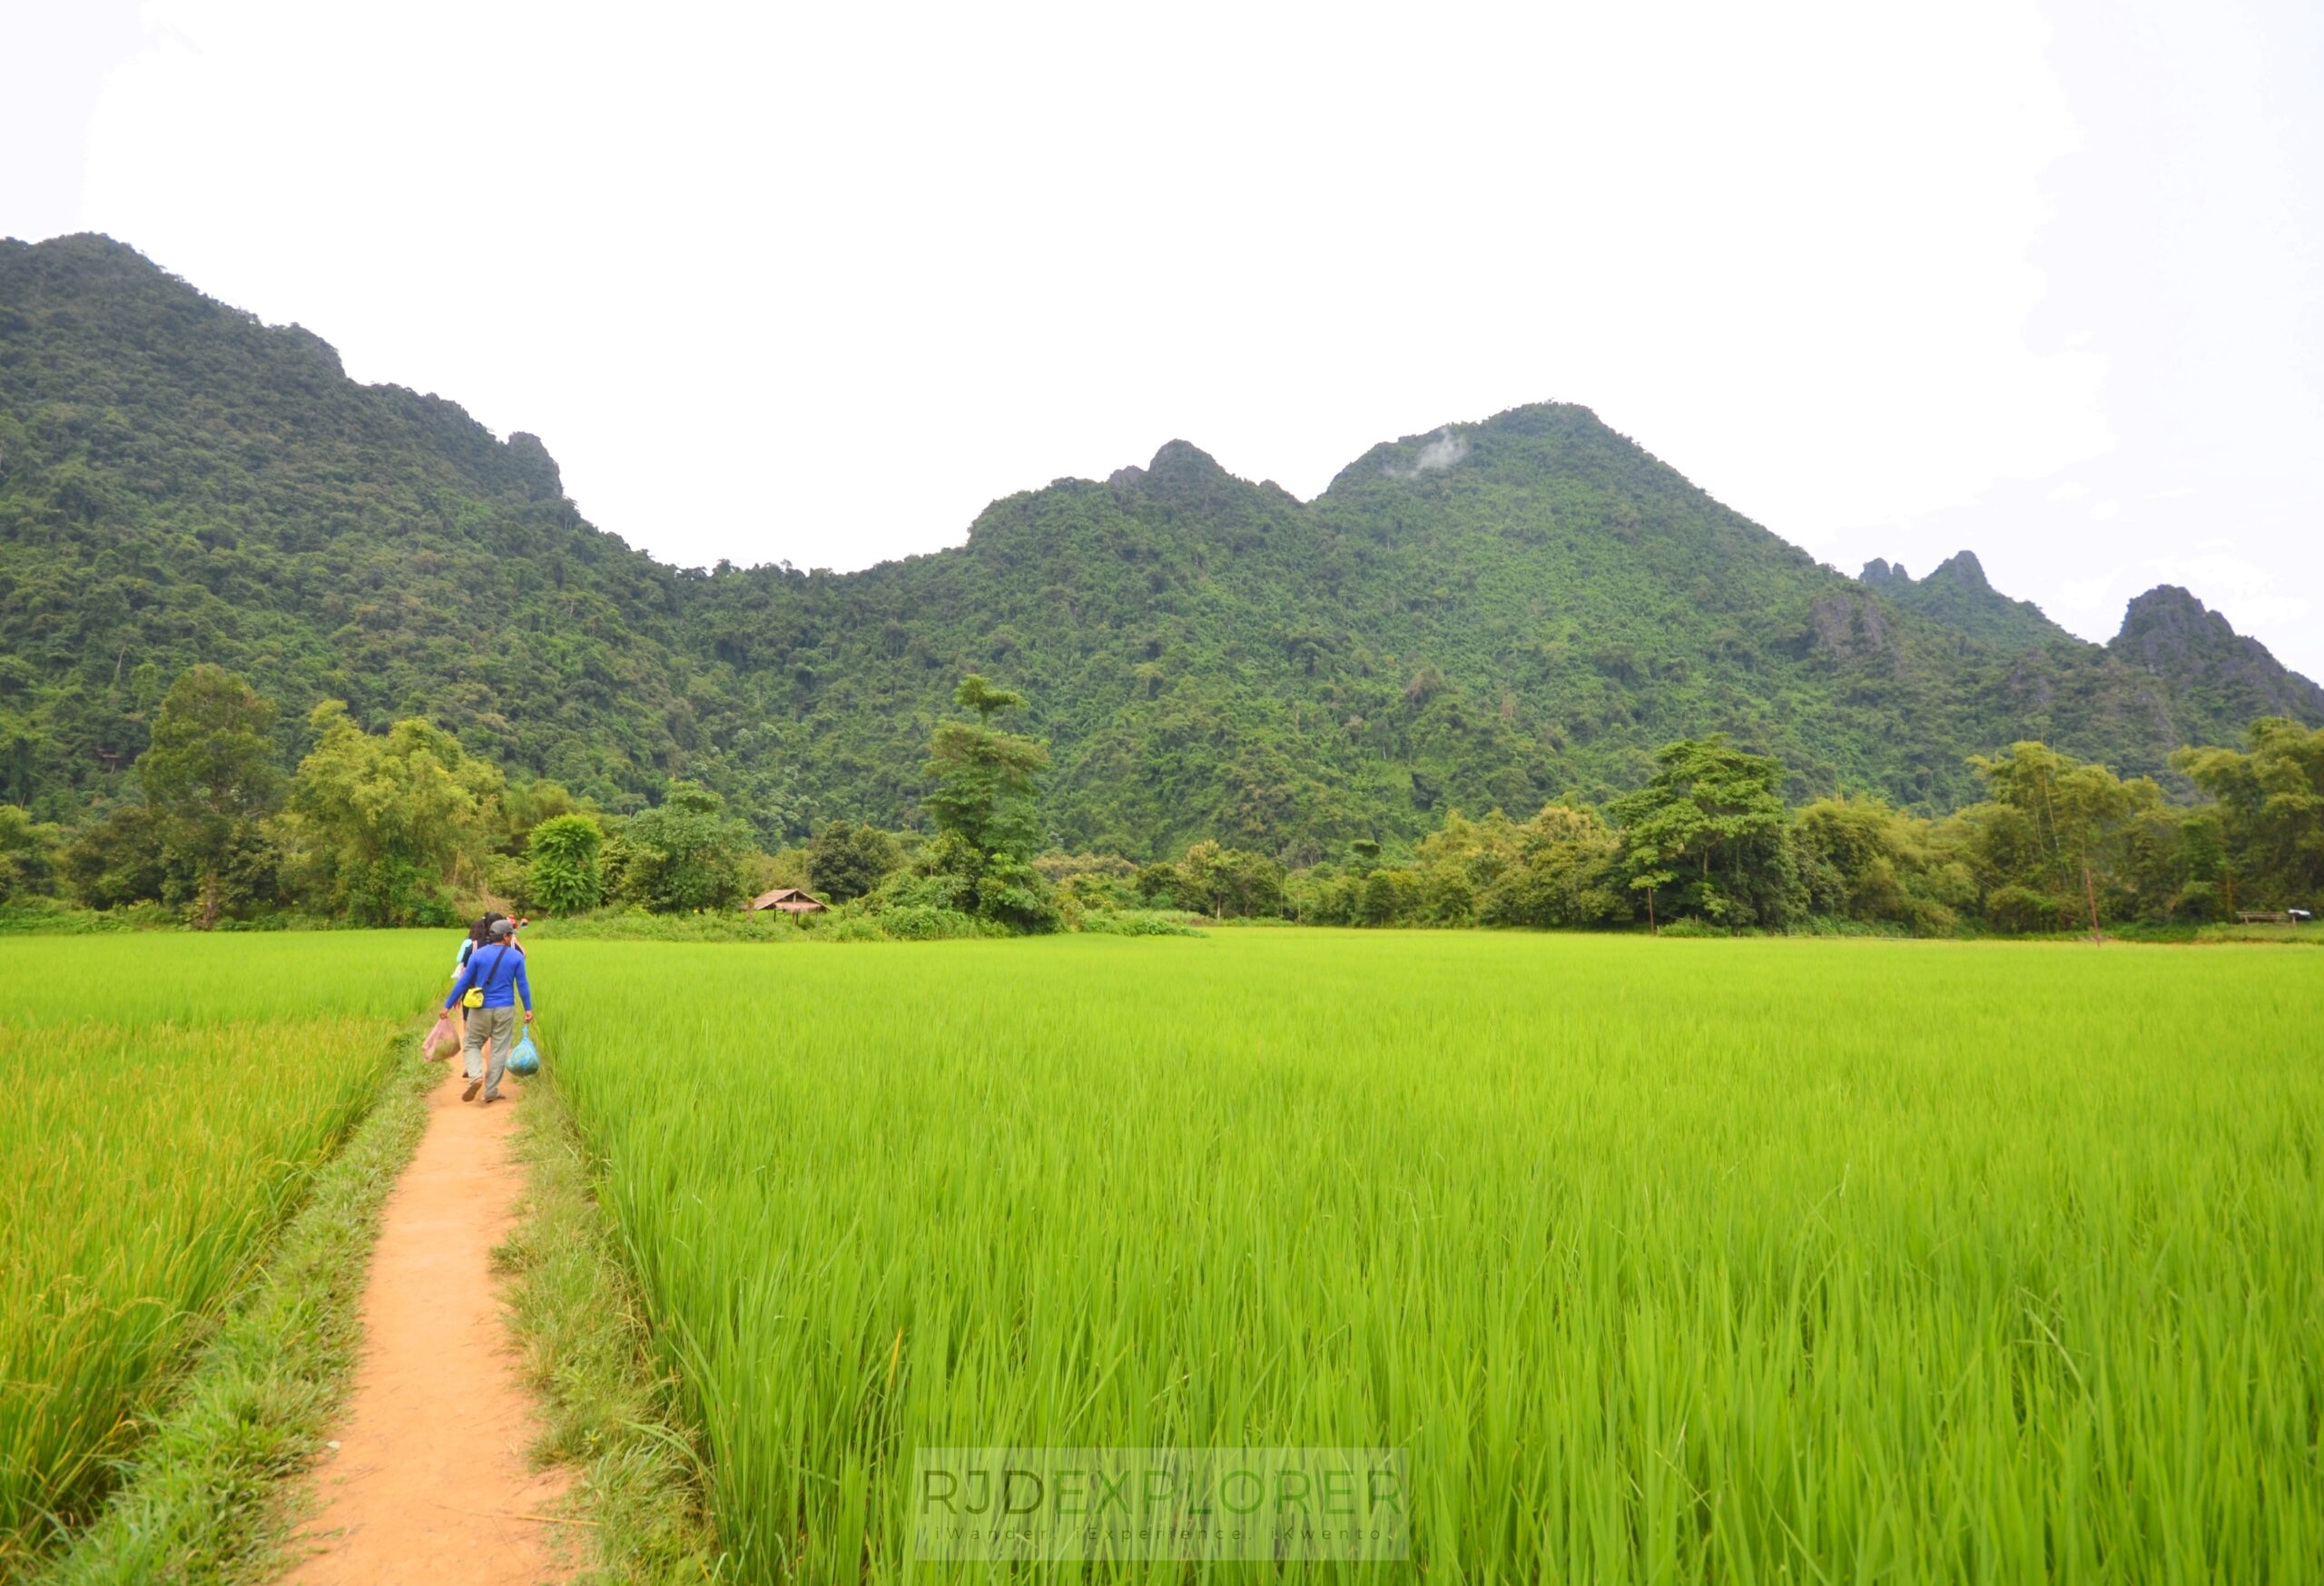 laos itinerary diy vang vieng rice fields and karst mountains